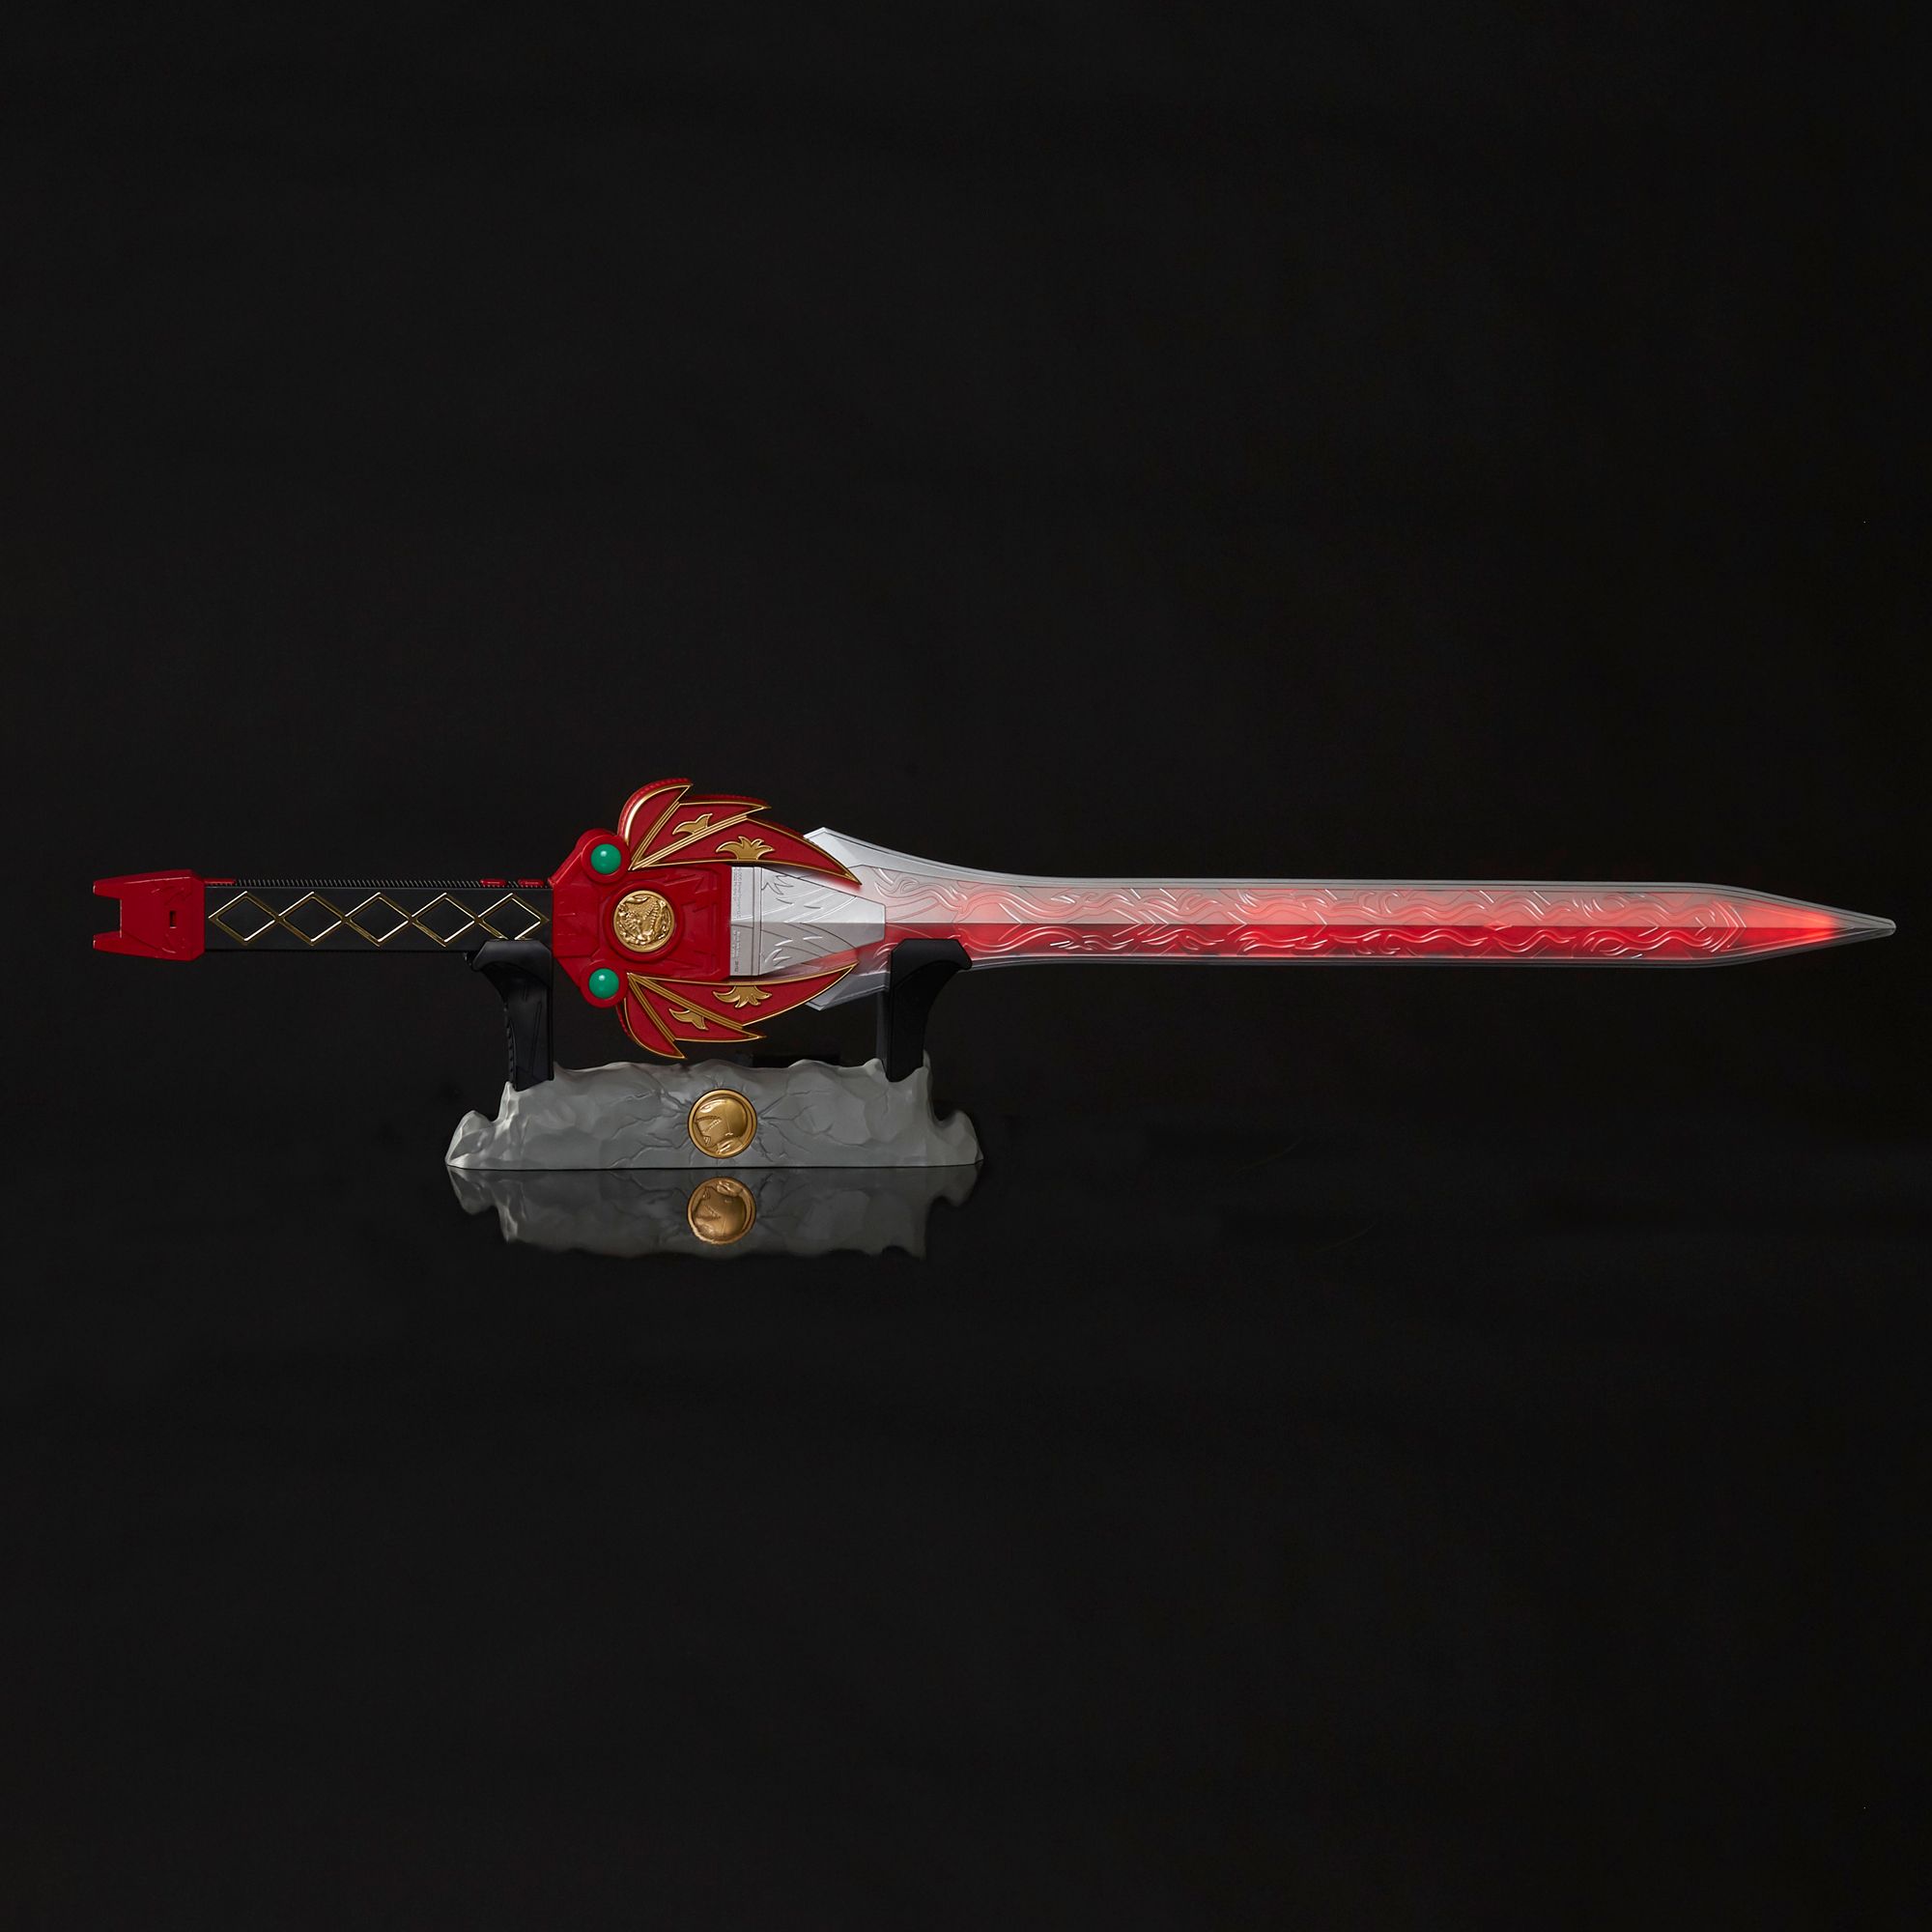 Power Rangers Lightning Collection Reveals Red Ranger Power Sword